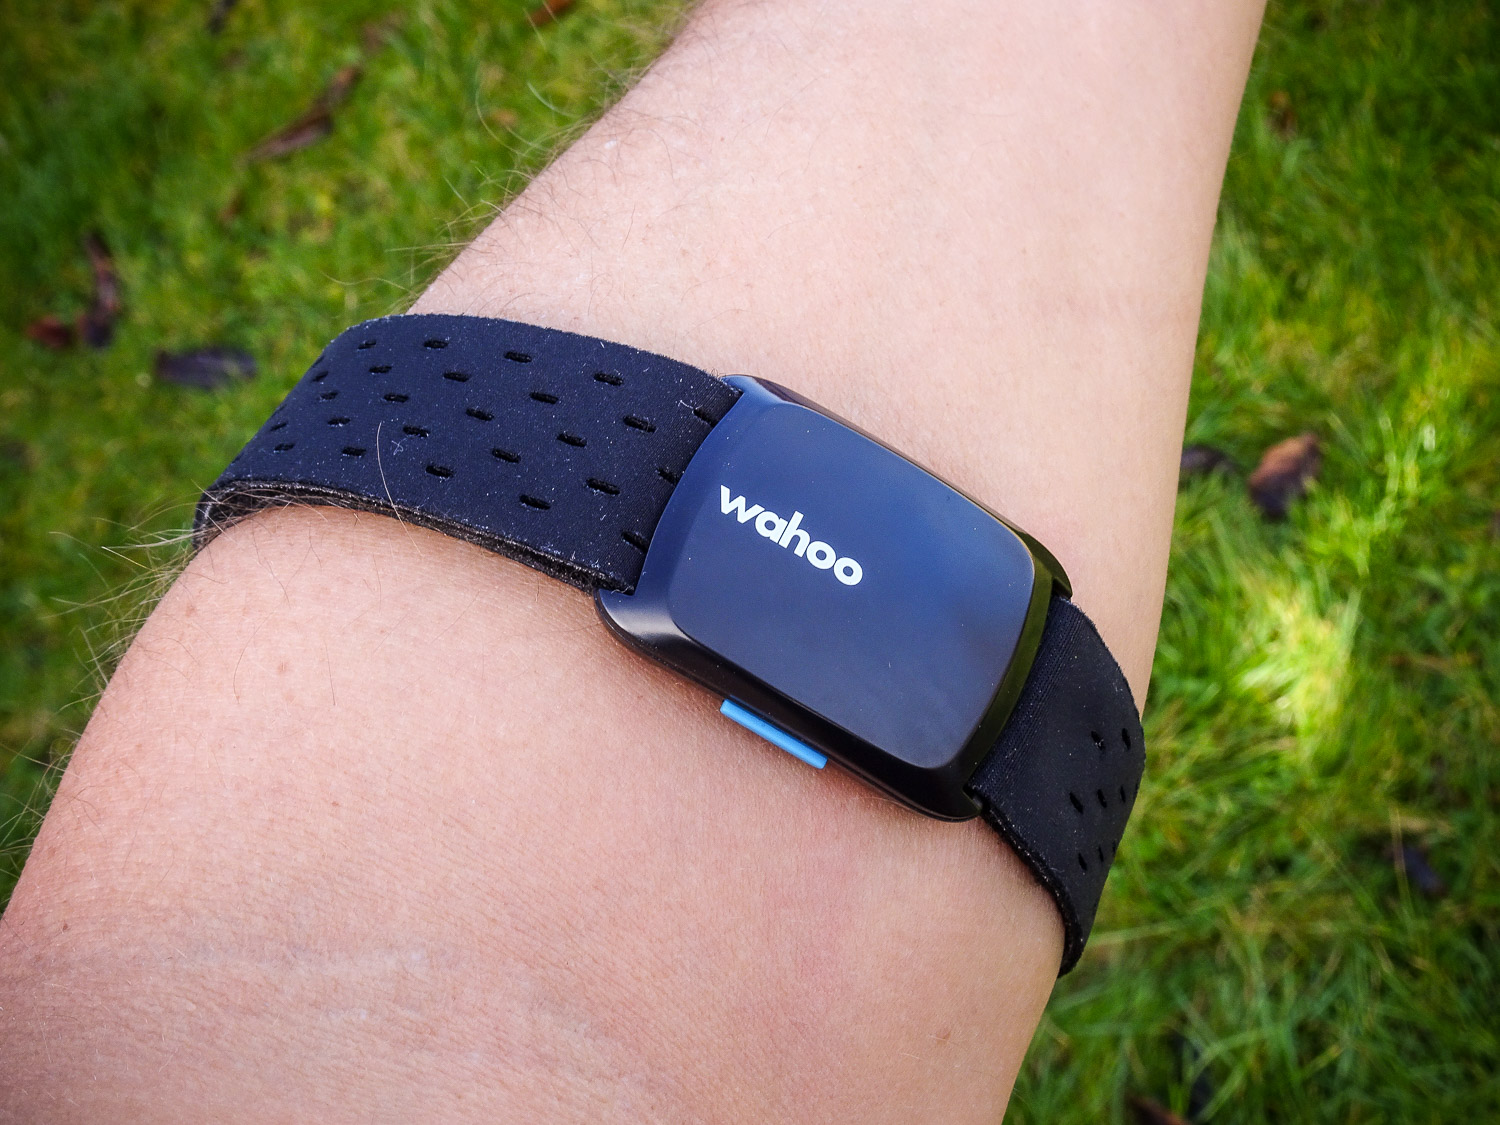 wahoo wrist heart rate monitor